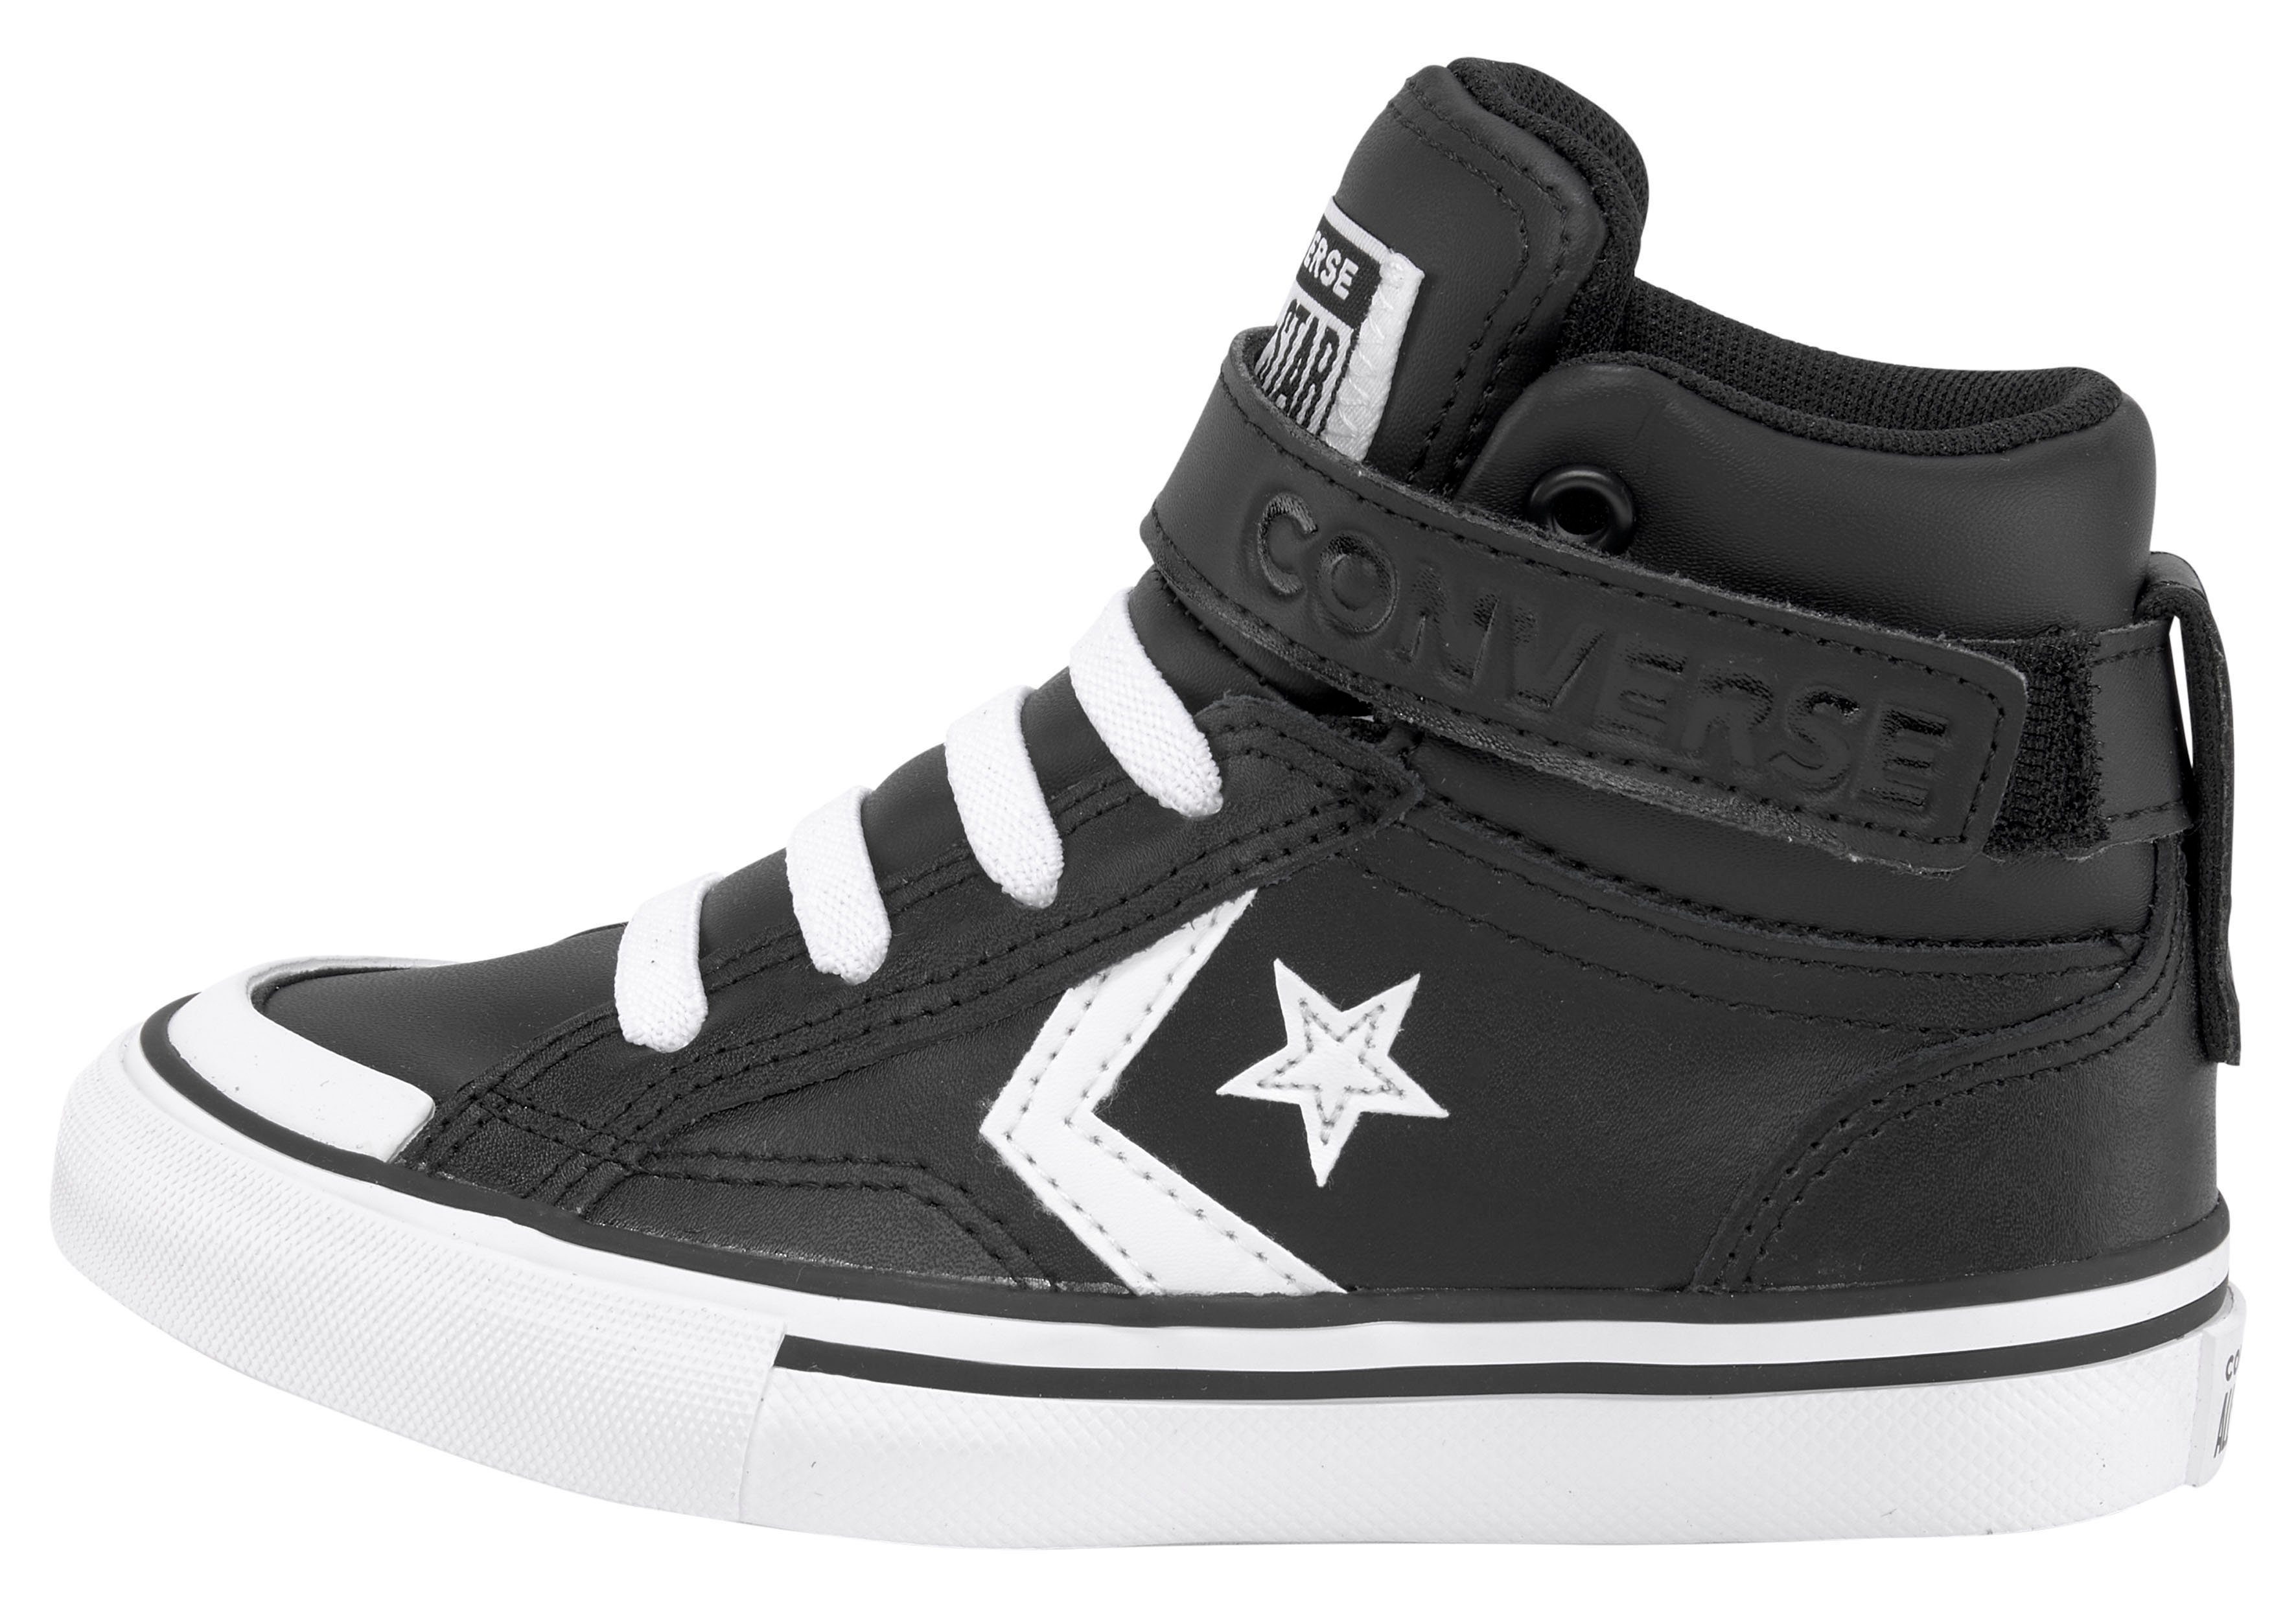 STRAP BLAZE PRO Converse schwarz-weiß LEATHER Sneaker